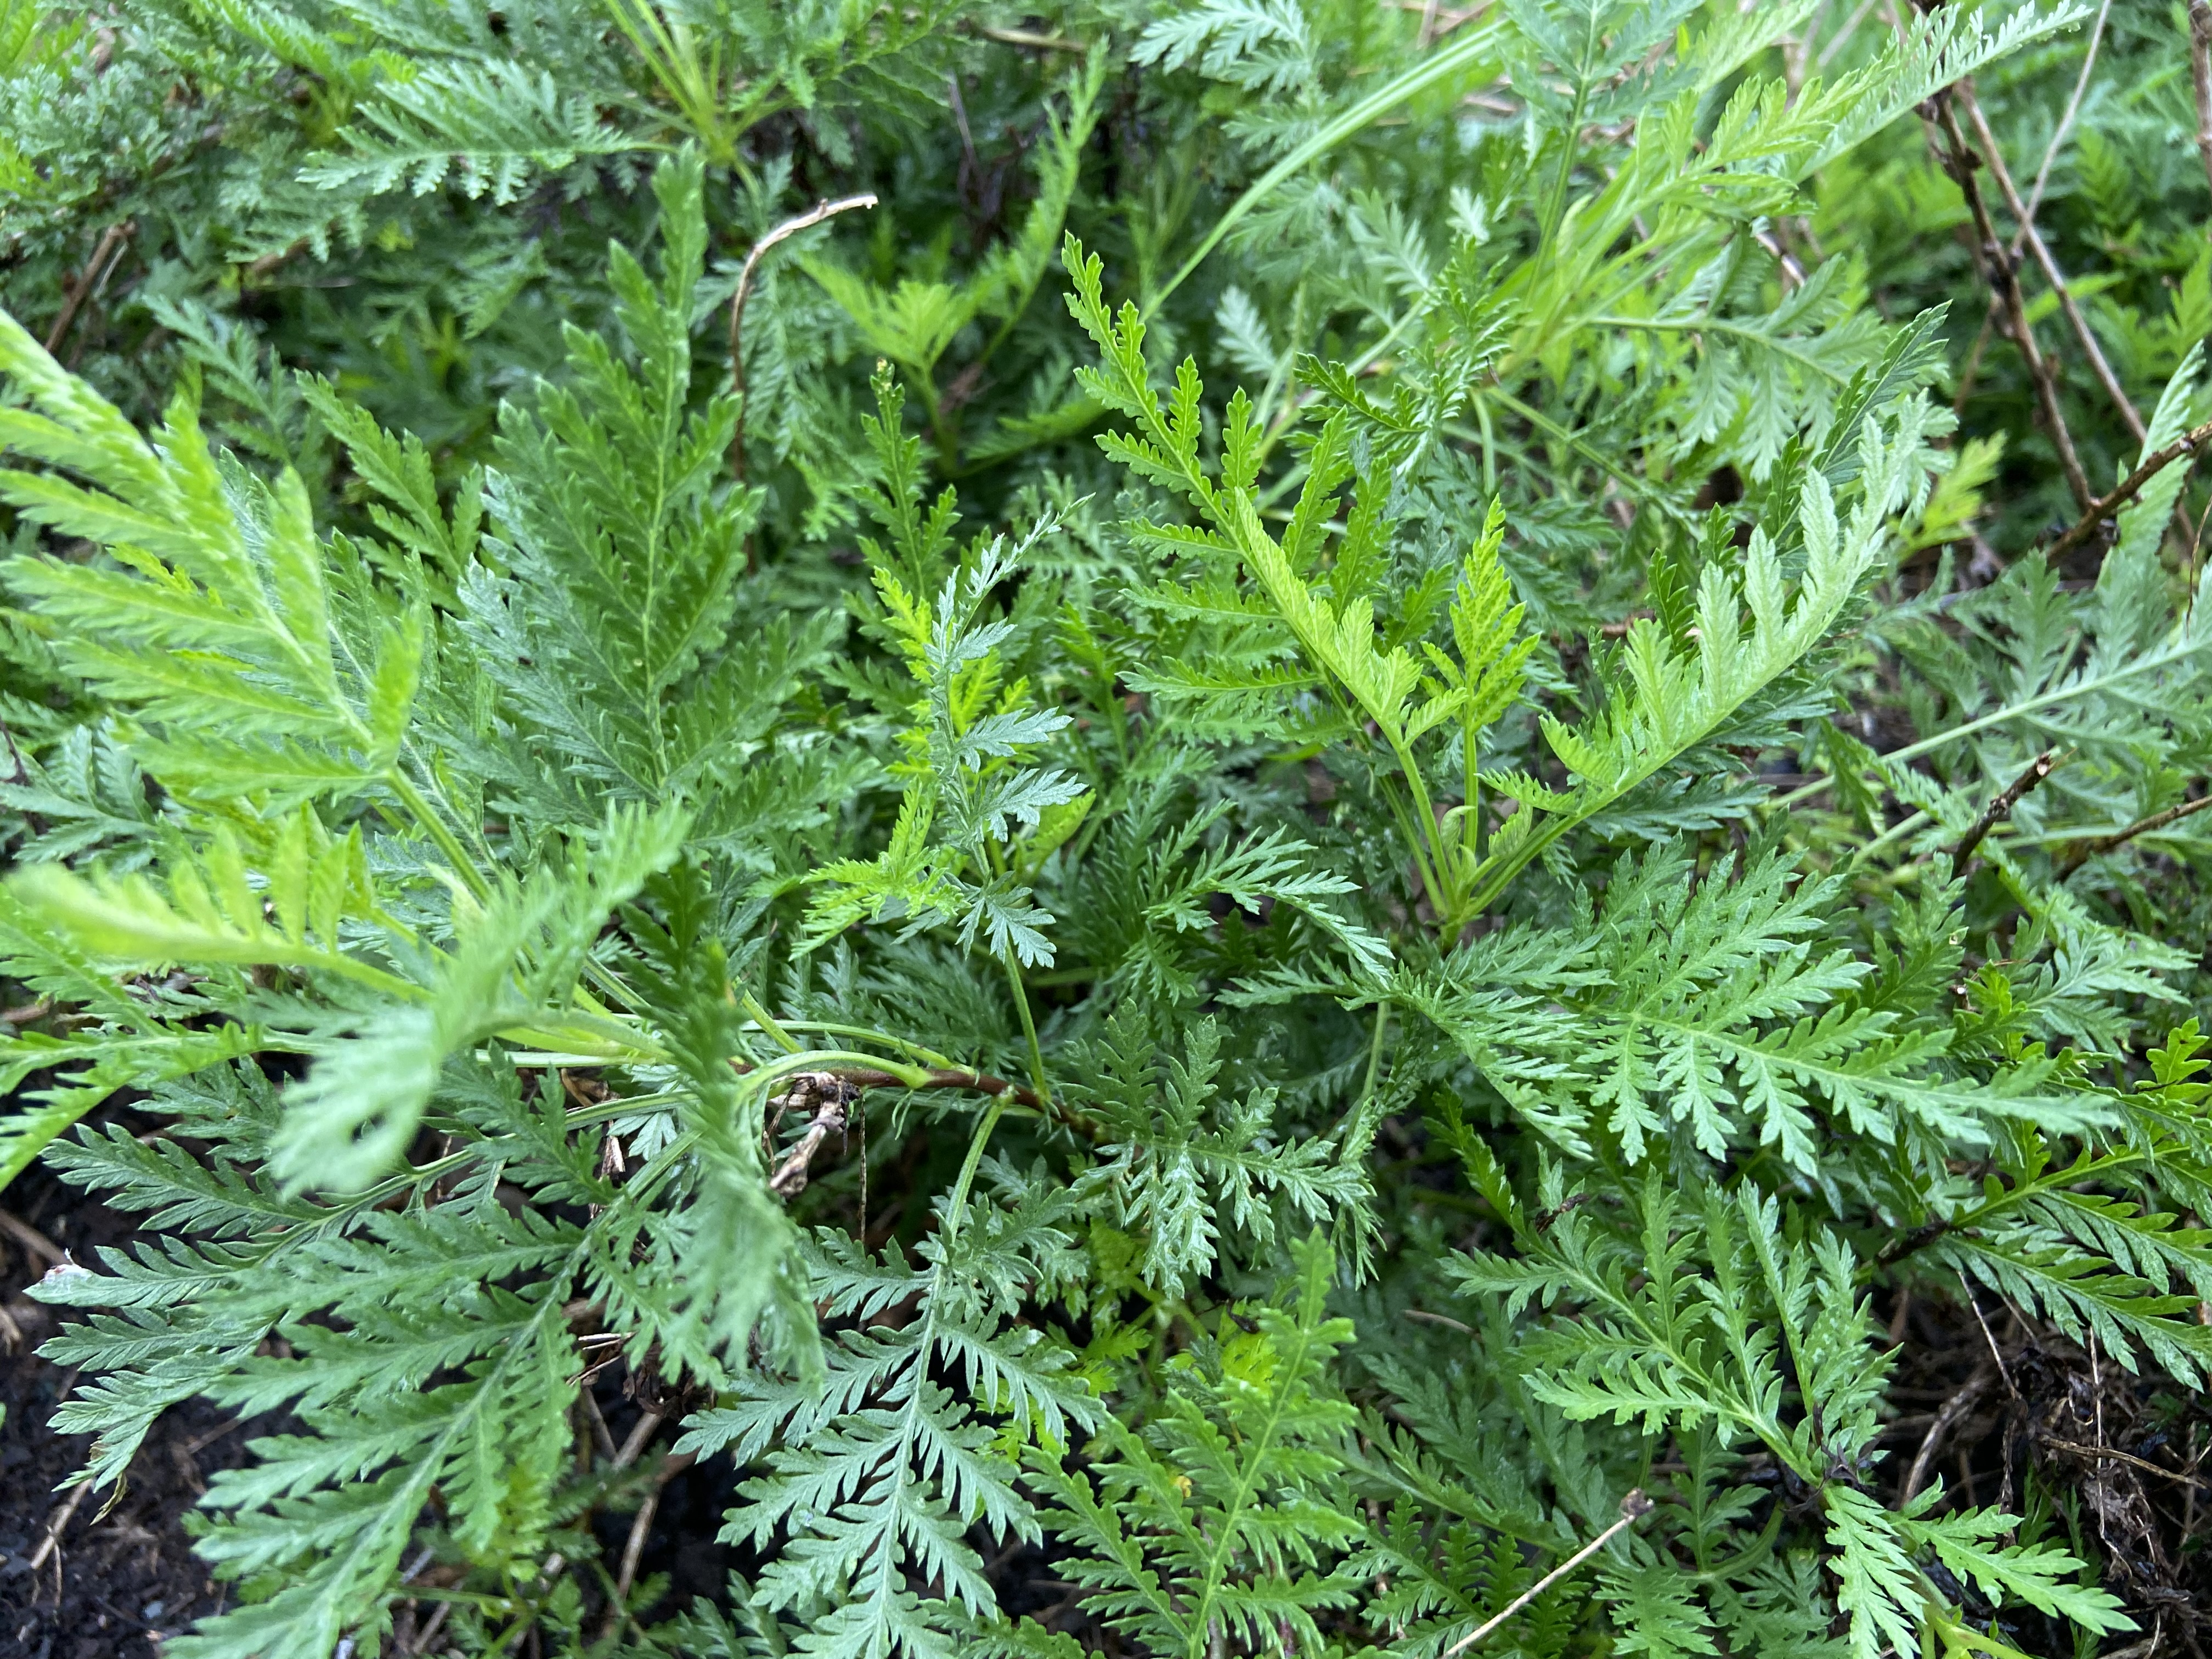 Artemisia gmelinii 'Balfernlym' - SunFern Olympia Russian wormwood